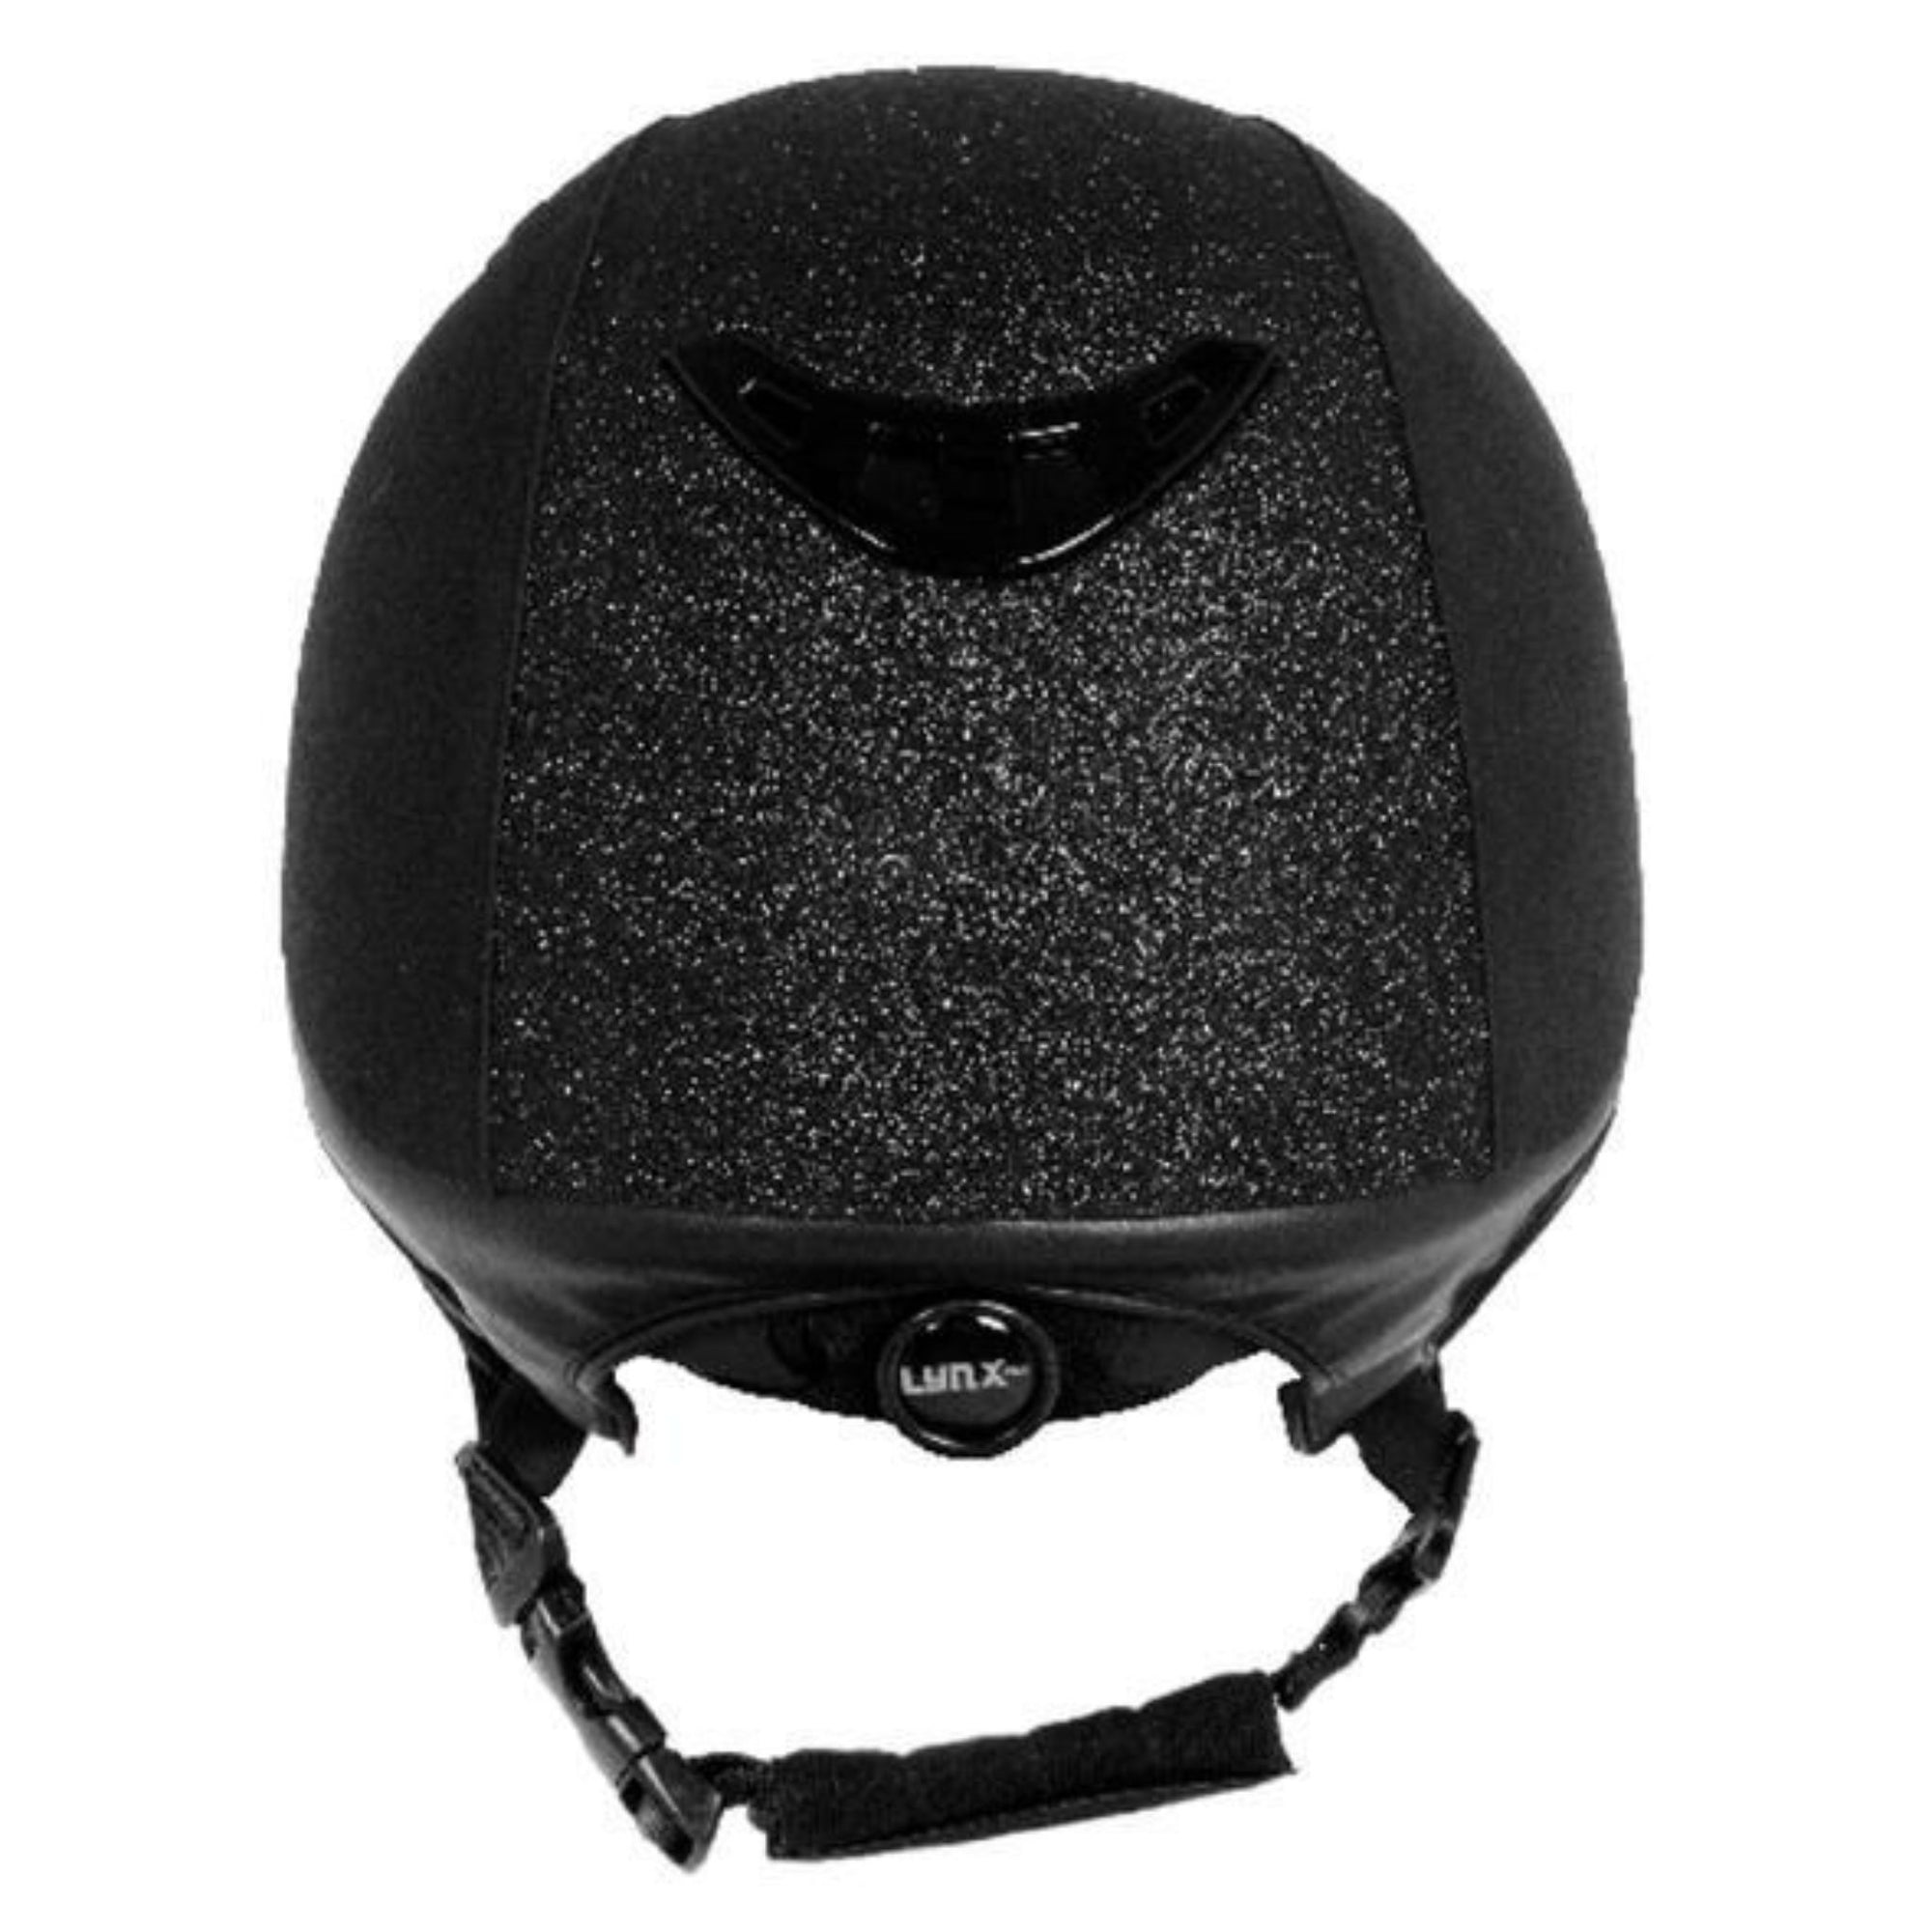 Black microfiber helmet with moderately glittery, sandy texture across top.